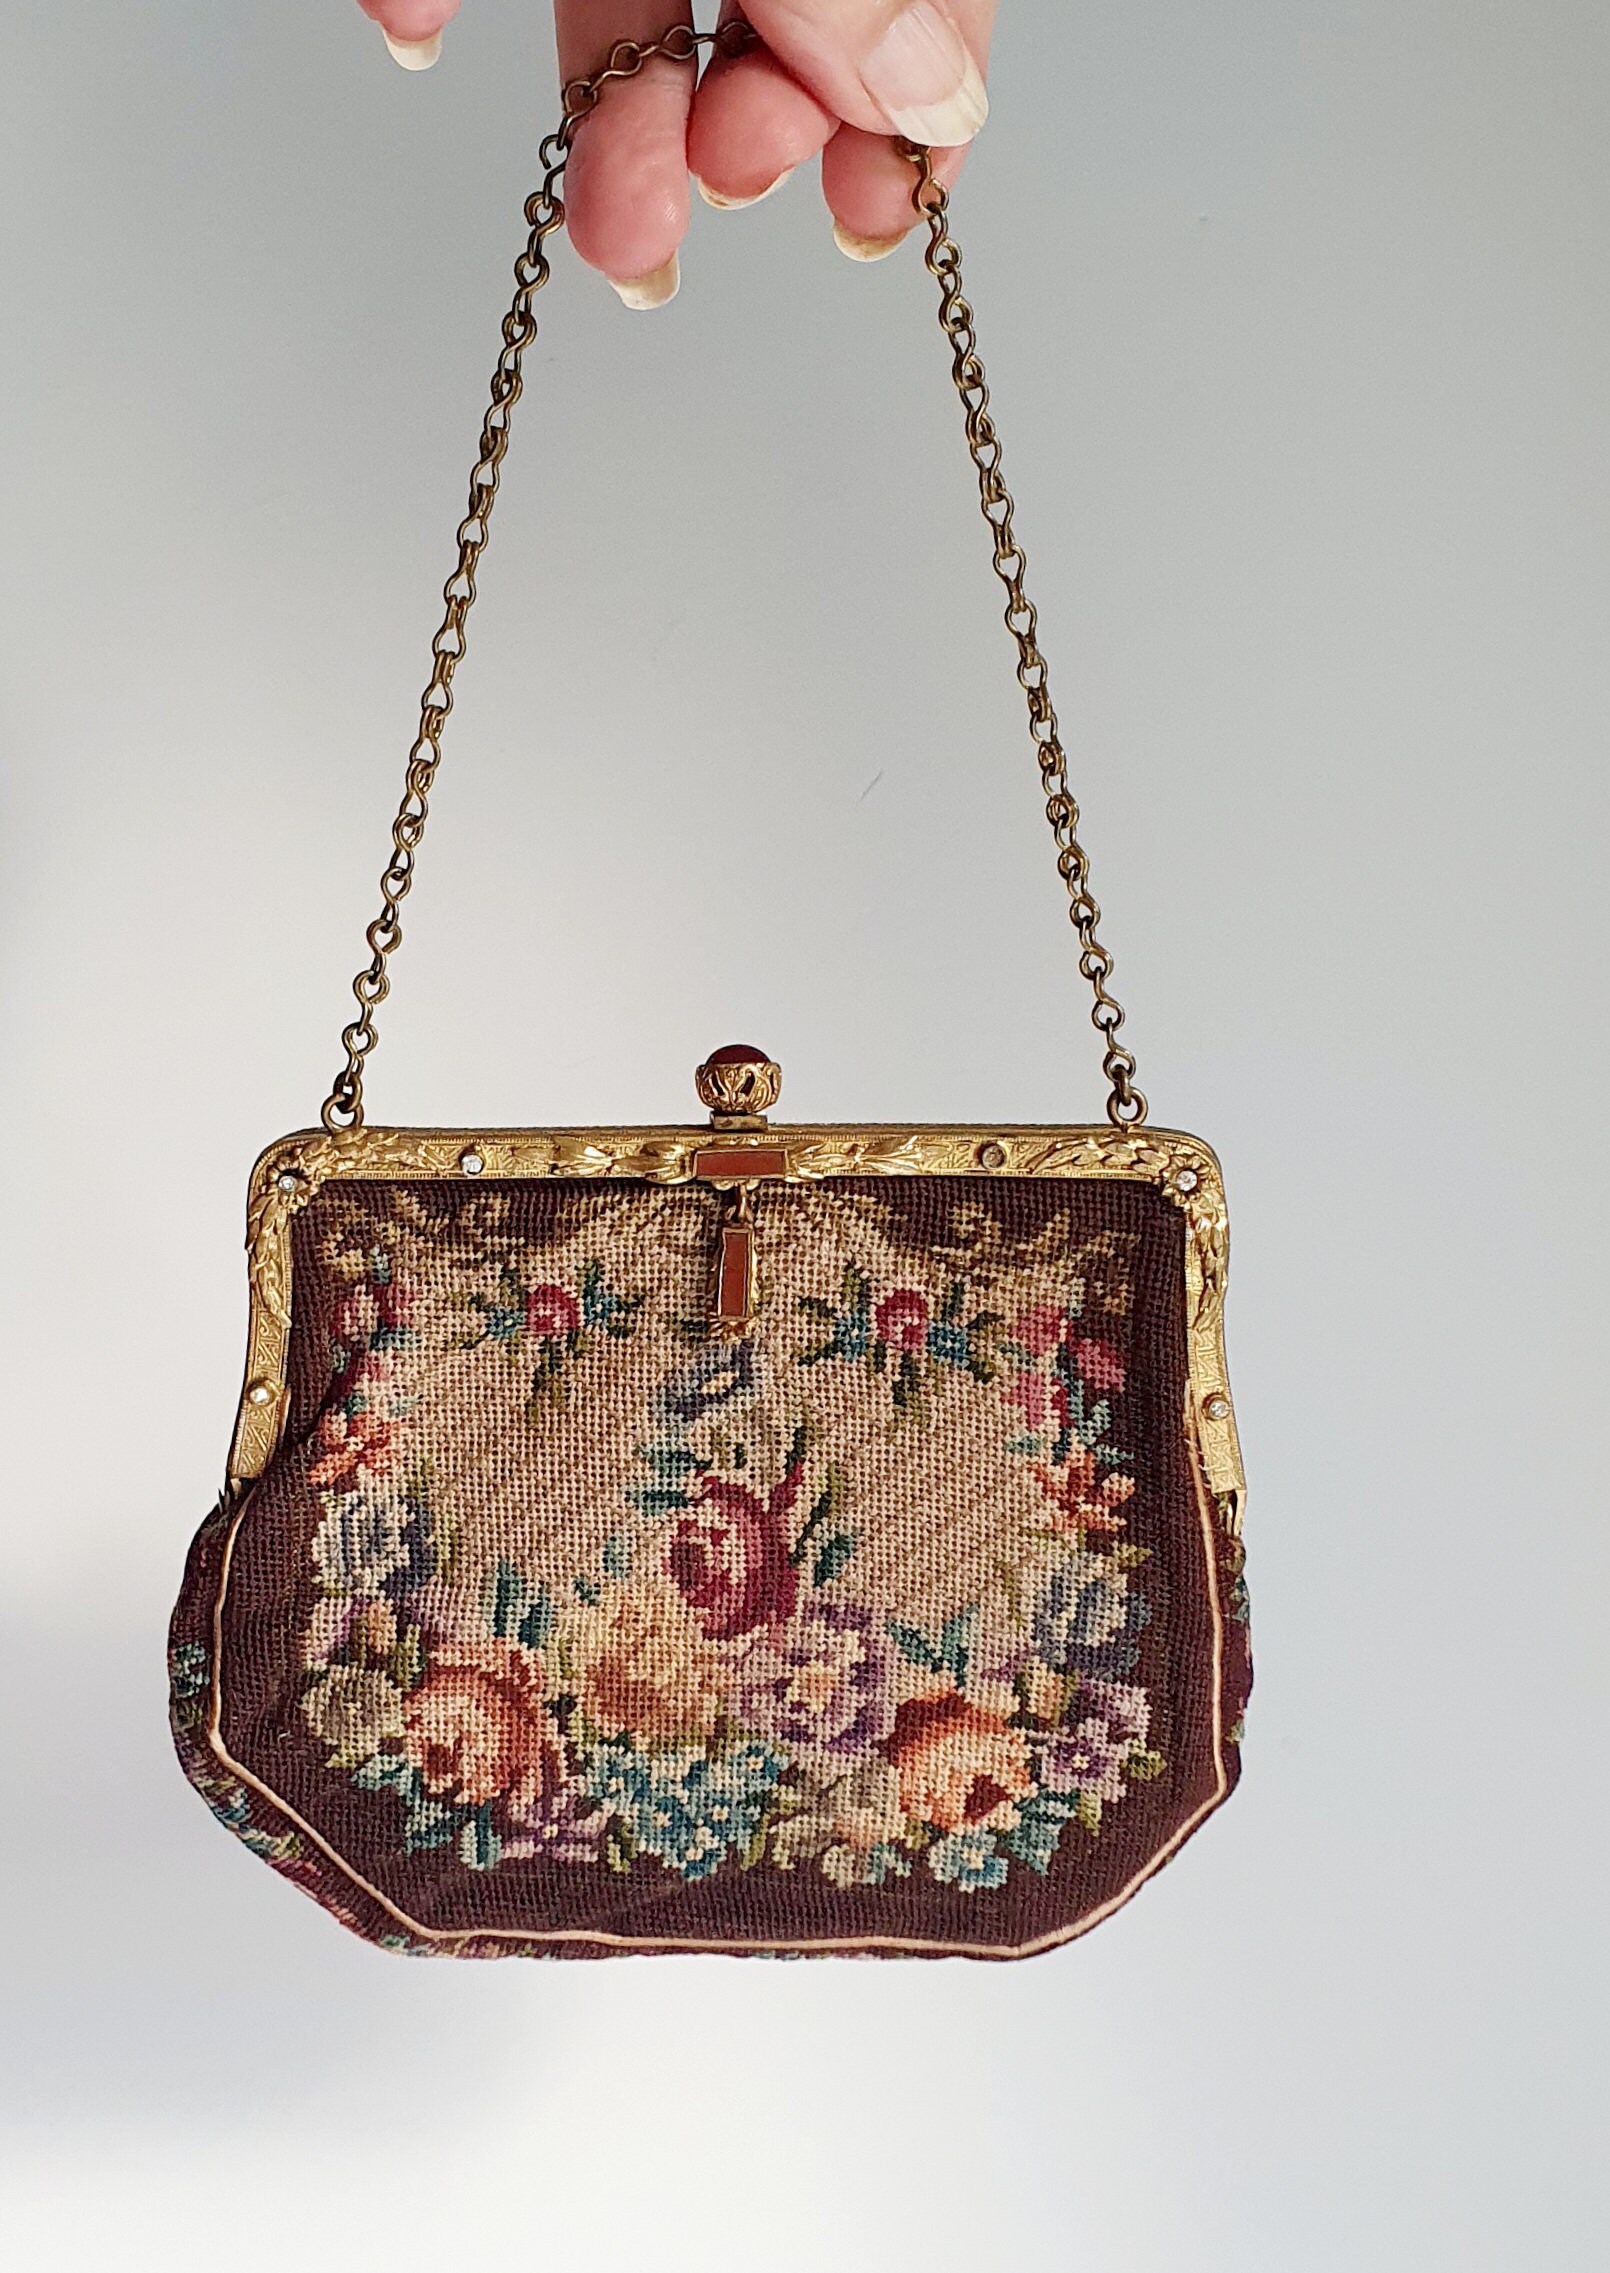 Edwardian opera purse / handbag - Gem